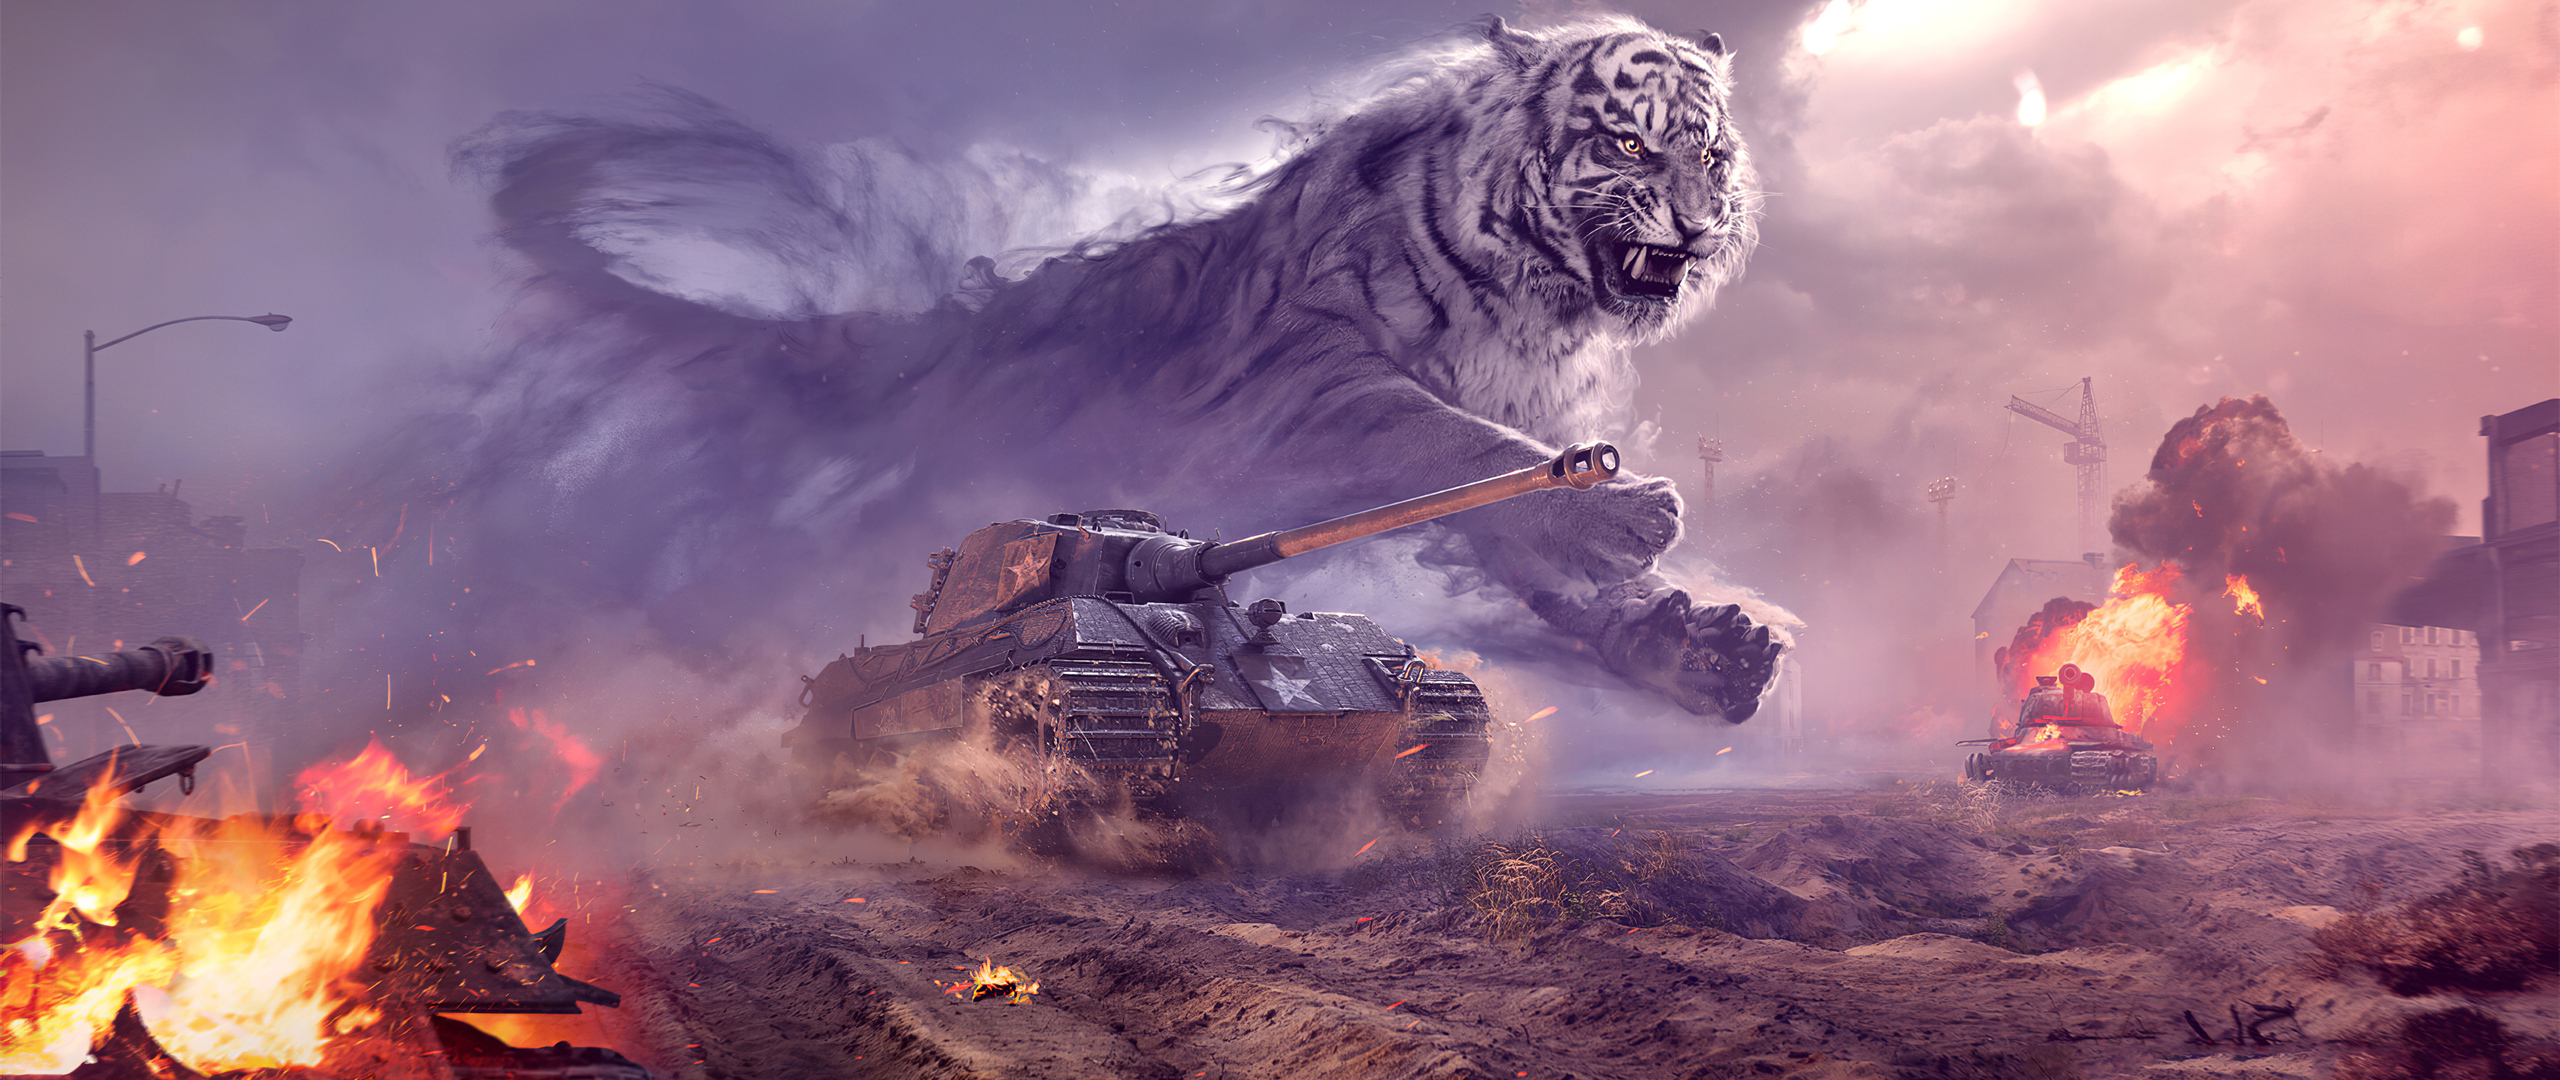 World of tank тигр. Тигр 2 свирепый в World of Tanks Blitz. Королевский тигр захваченный WOT. Королевский тигр ворлд оф танк. Тигр 2 танк блиц.